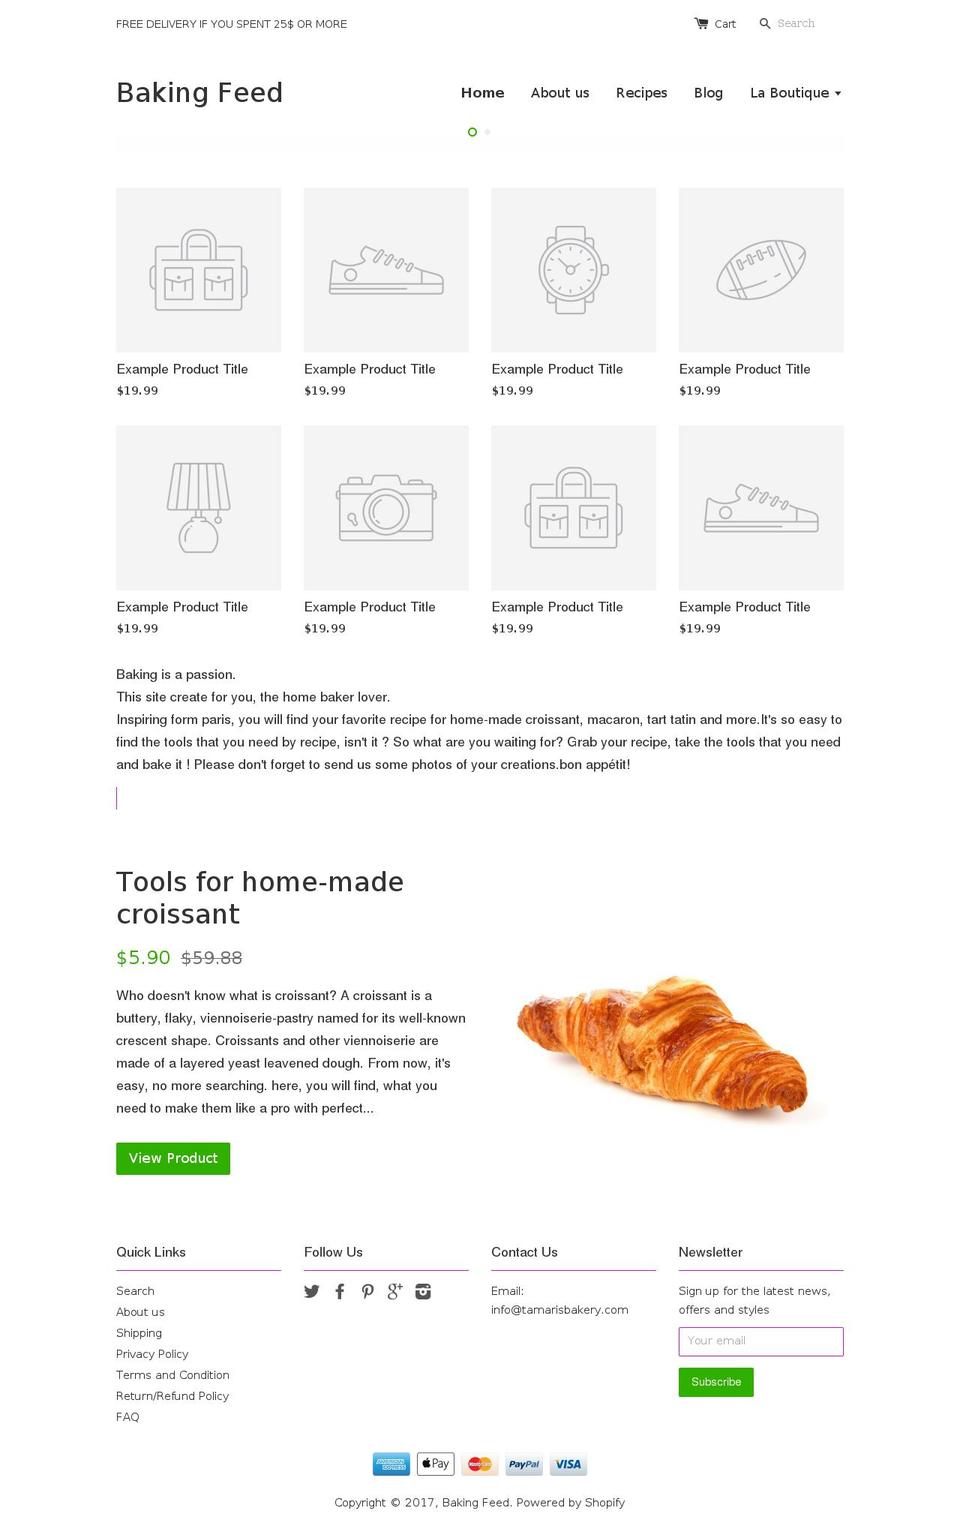 tamaris-bakery.myshopify.com shopify website screenshot